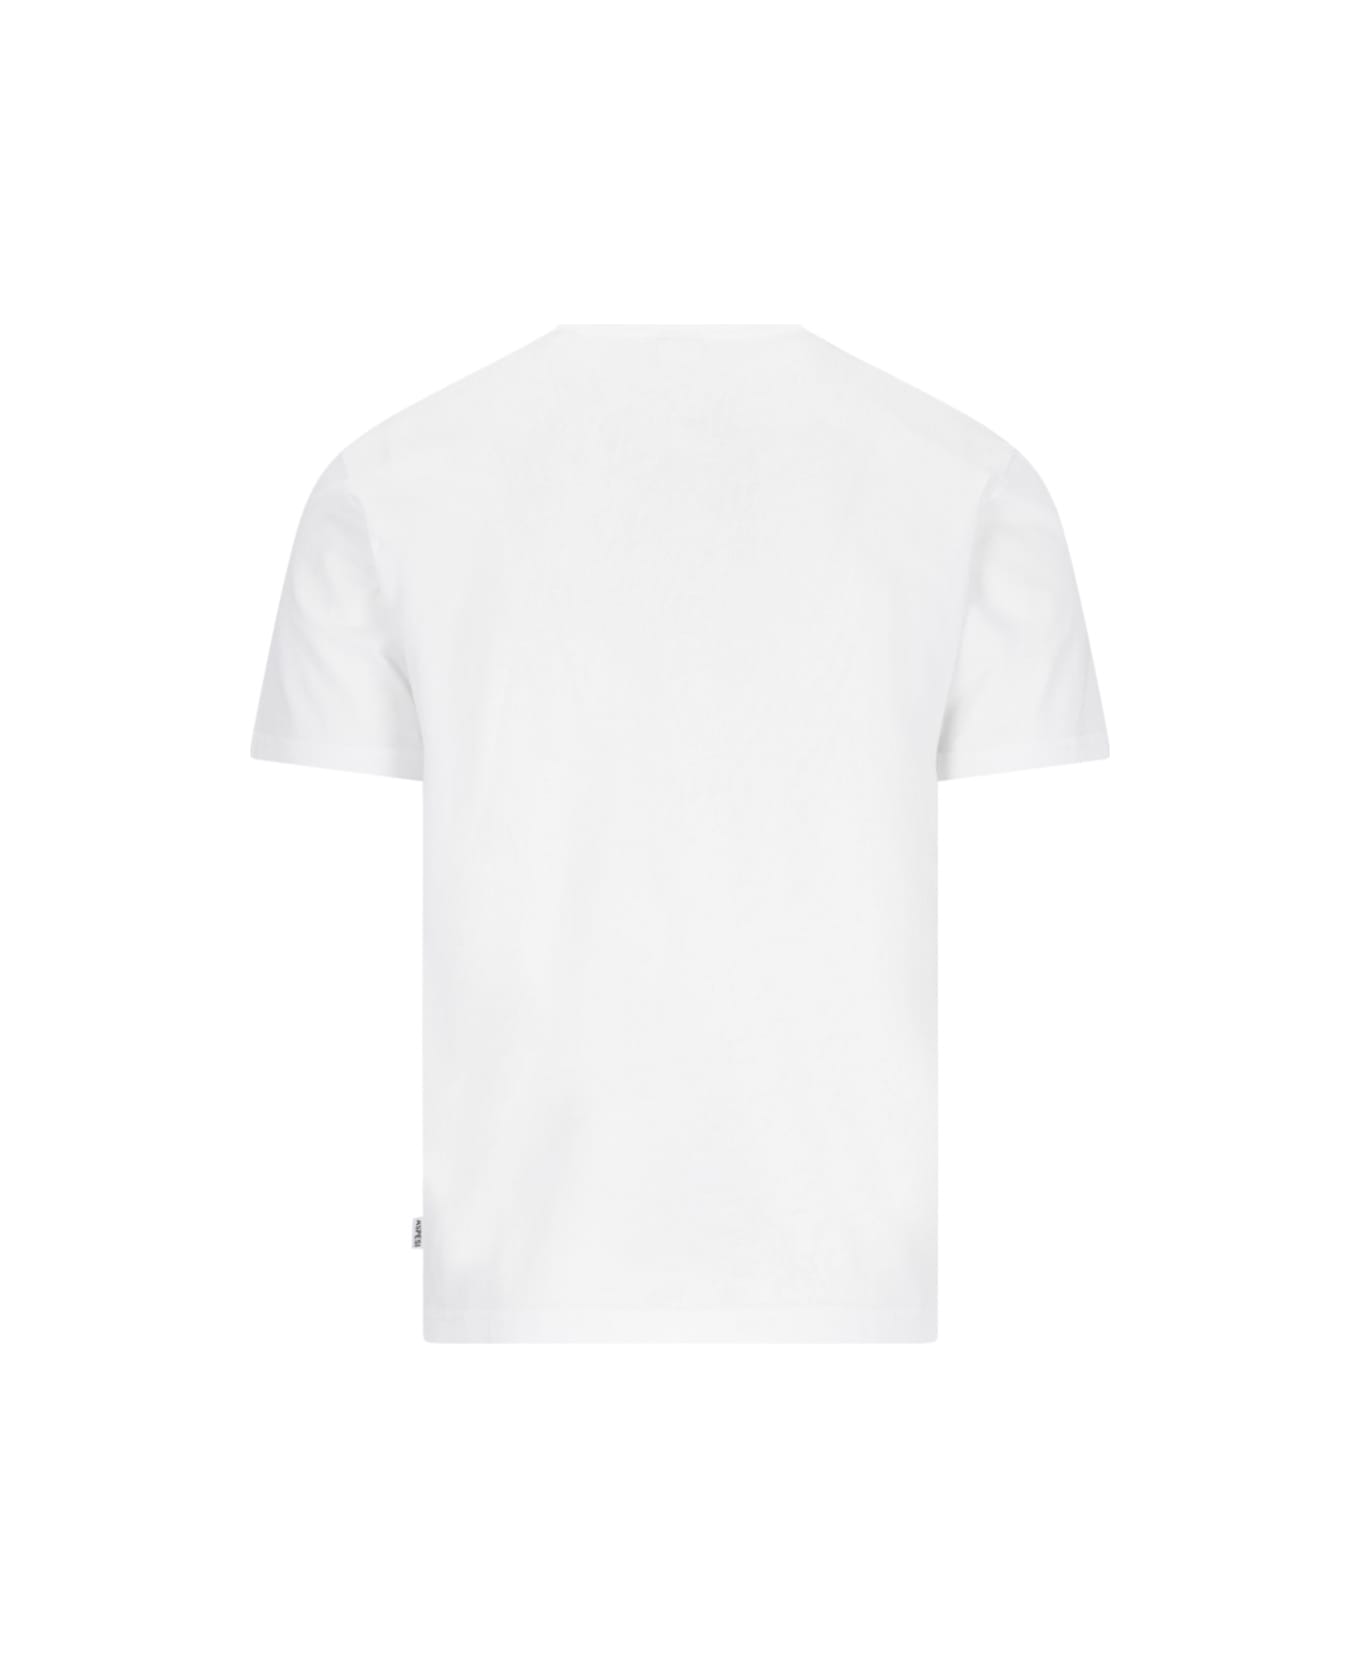 Aspesi Basic T-shirt - White